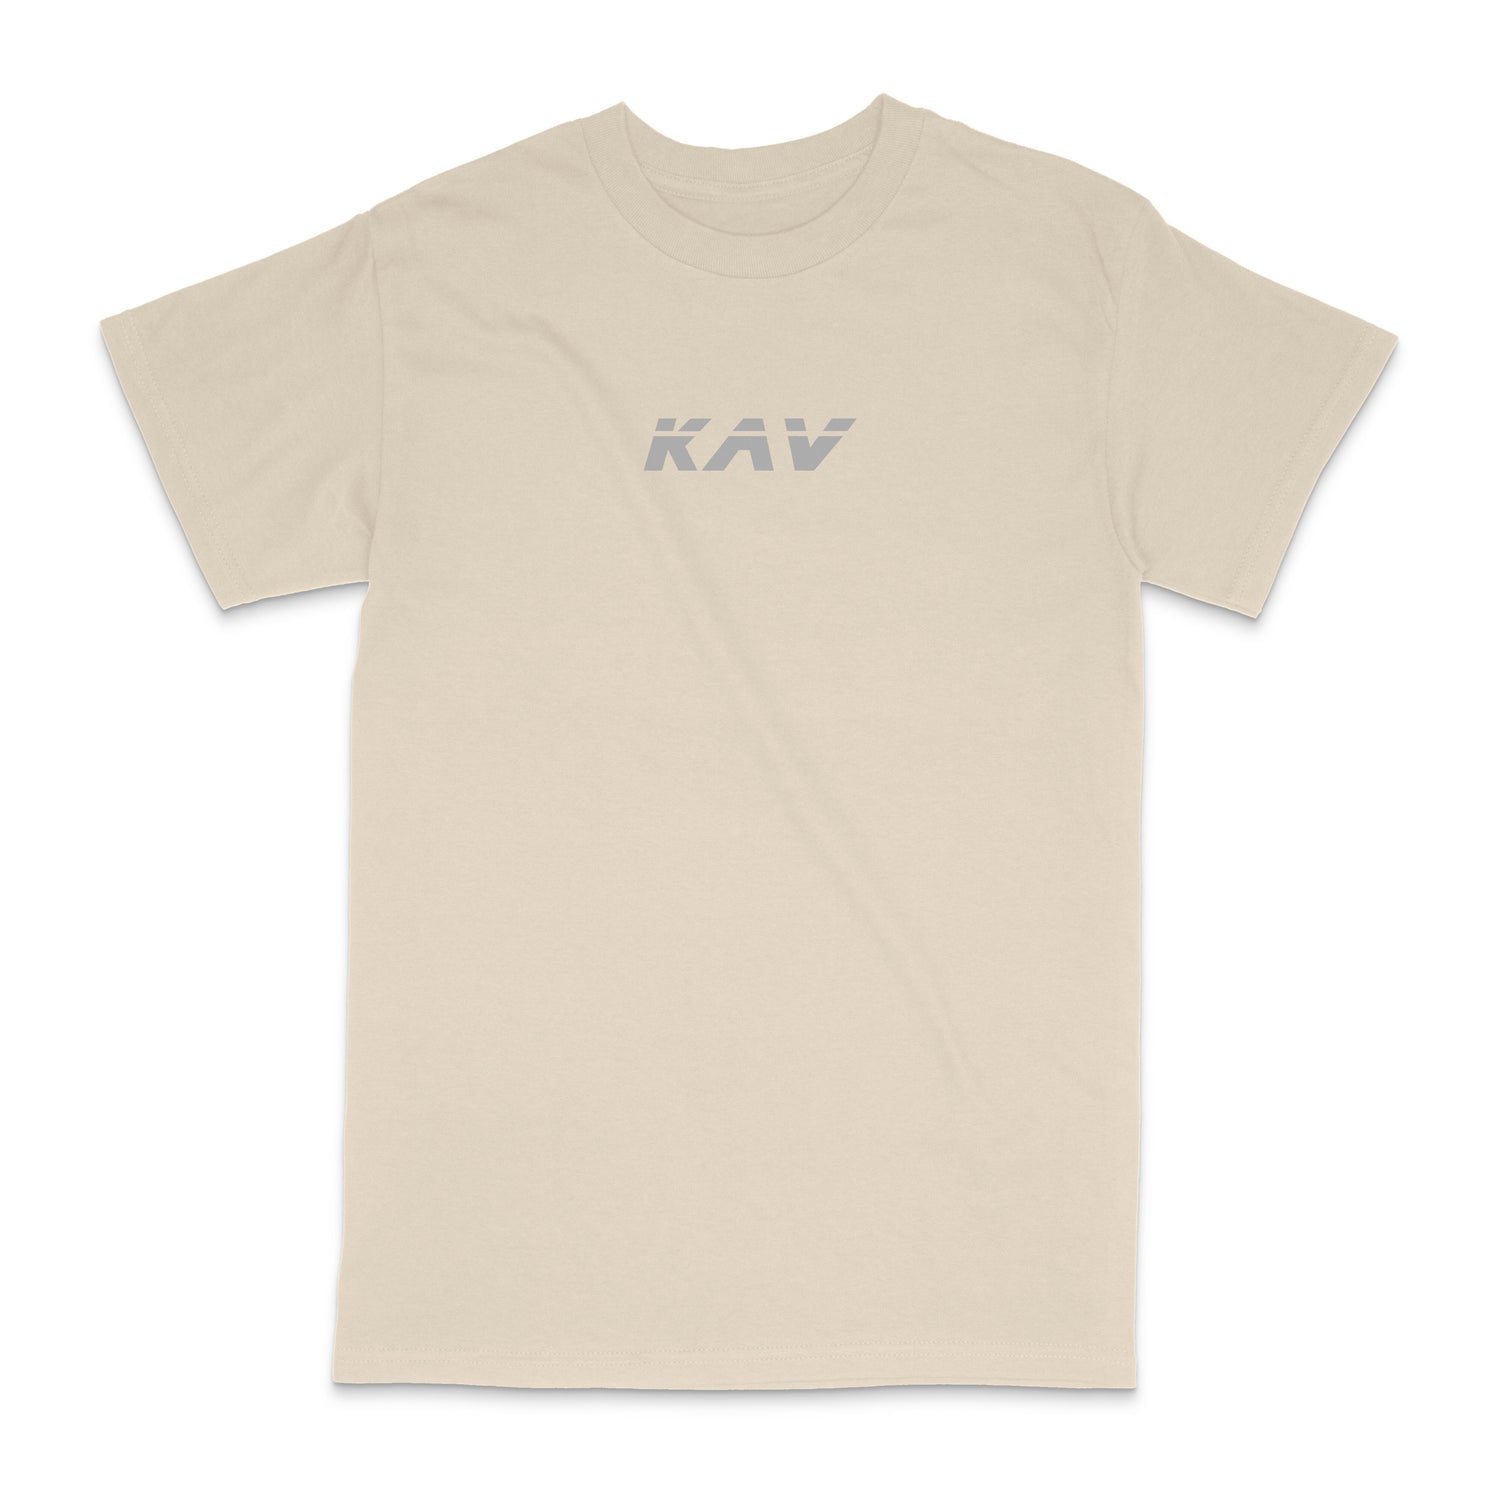 Camiseta extragrande beige KAV